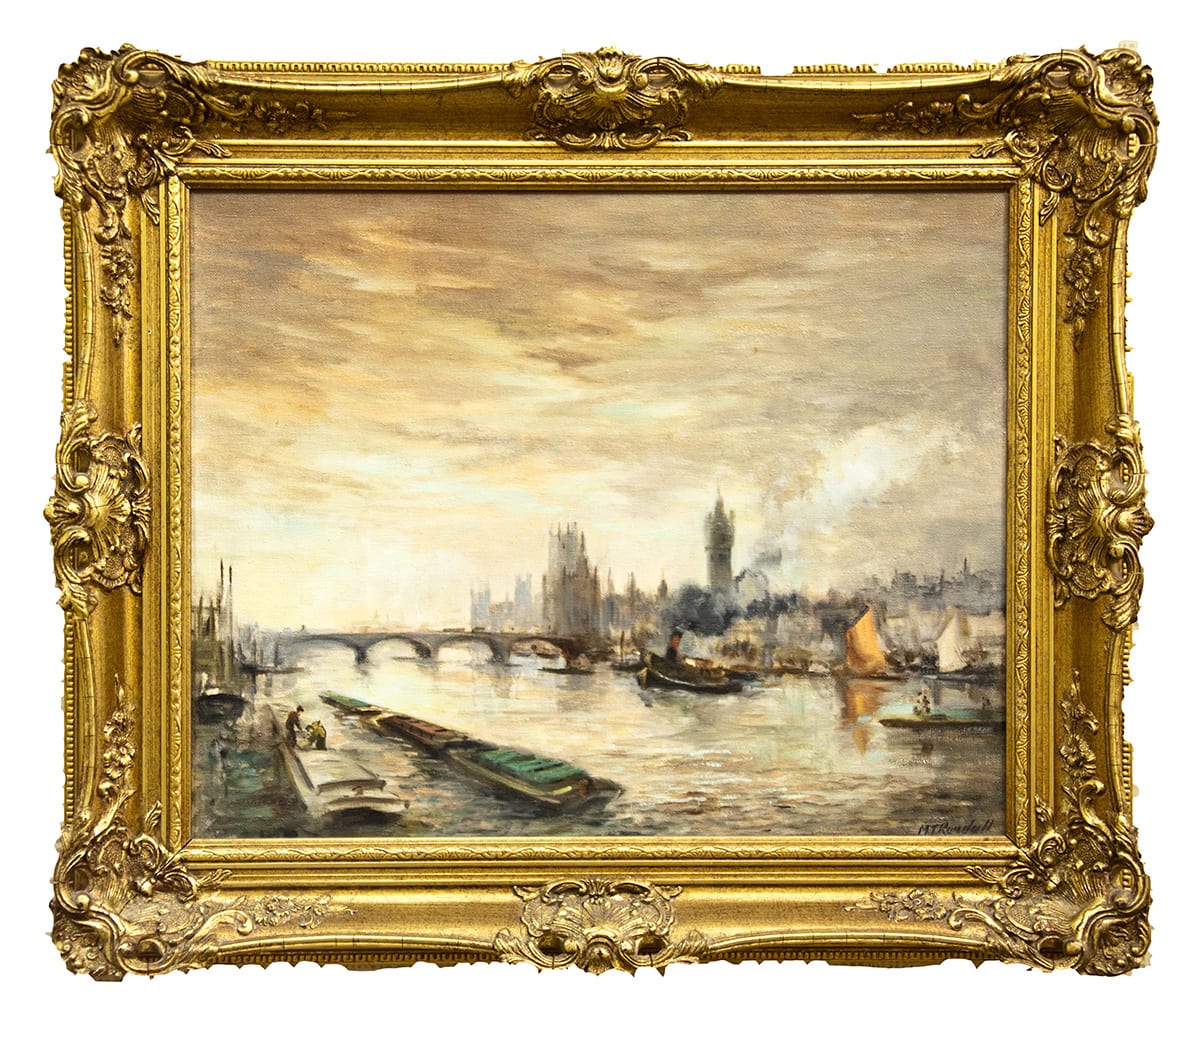 Thames landscape by M.T. Randell 